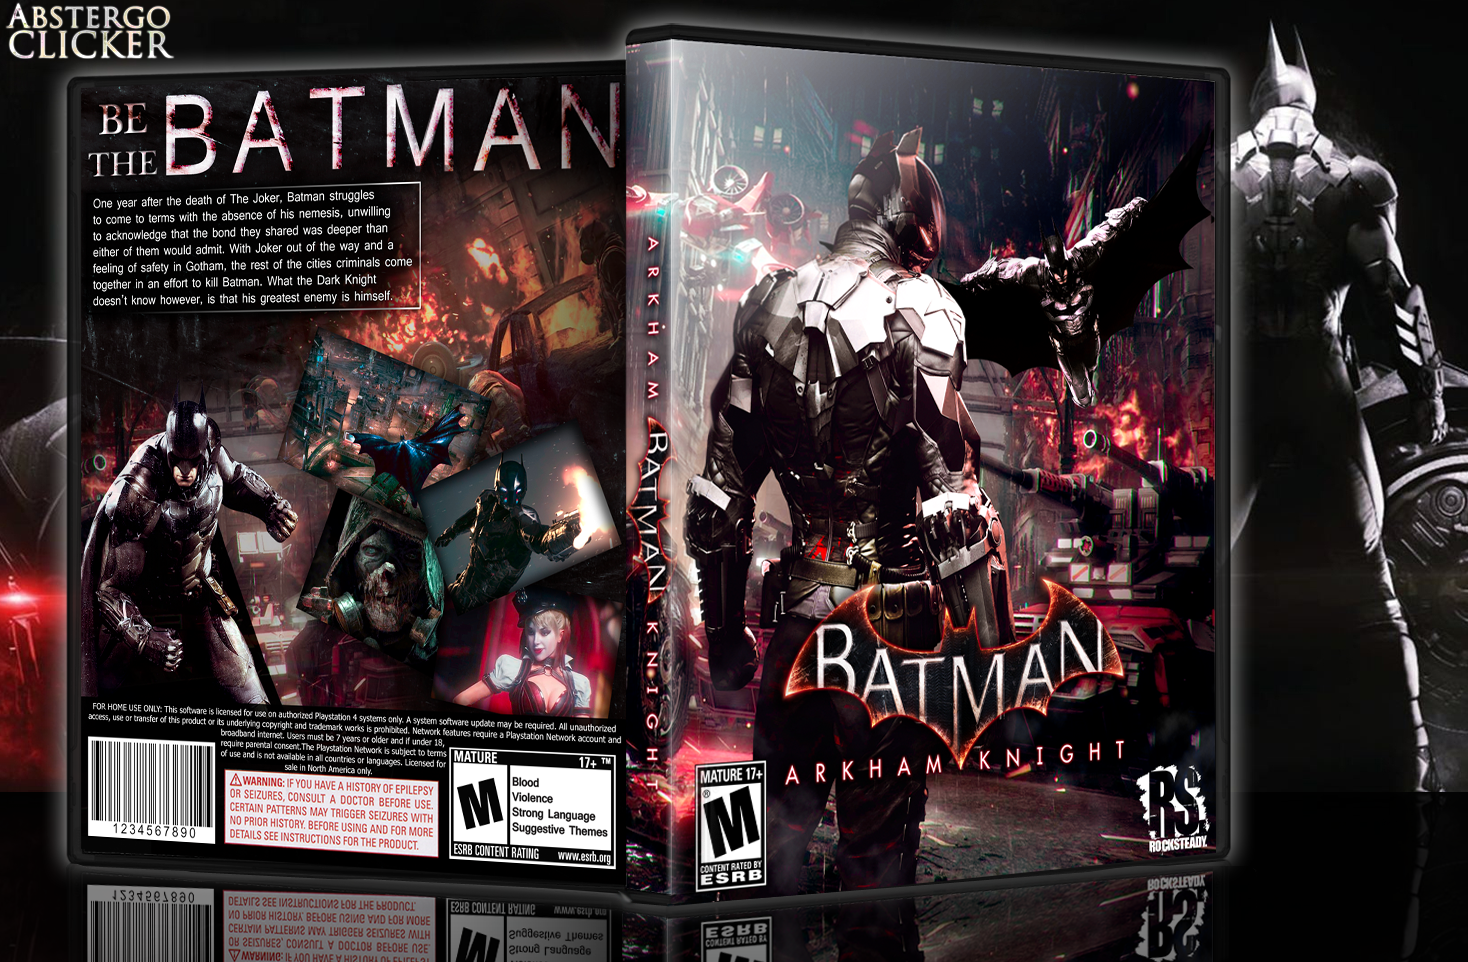 batman arkham knight ps4 cover